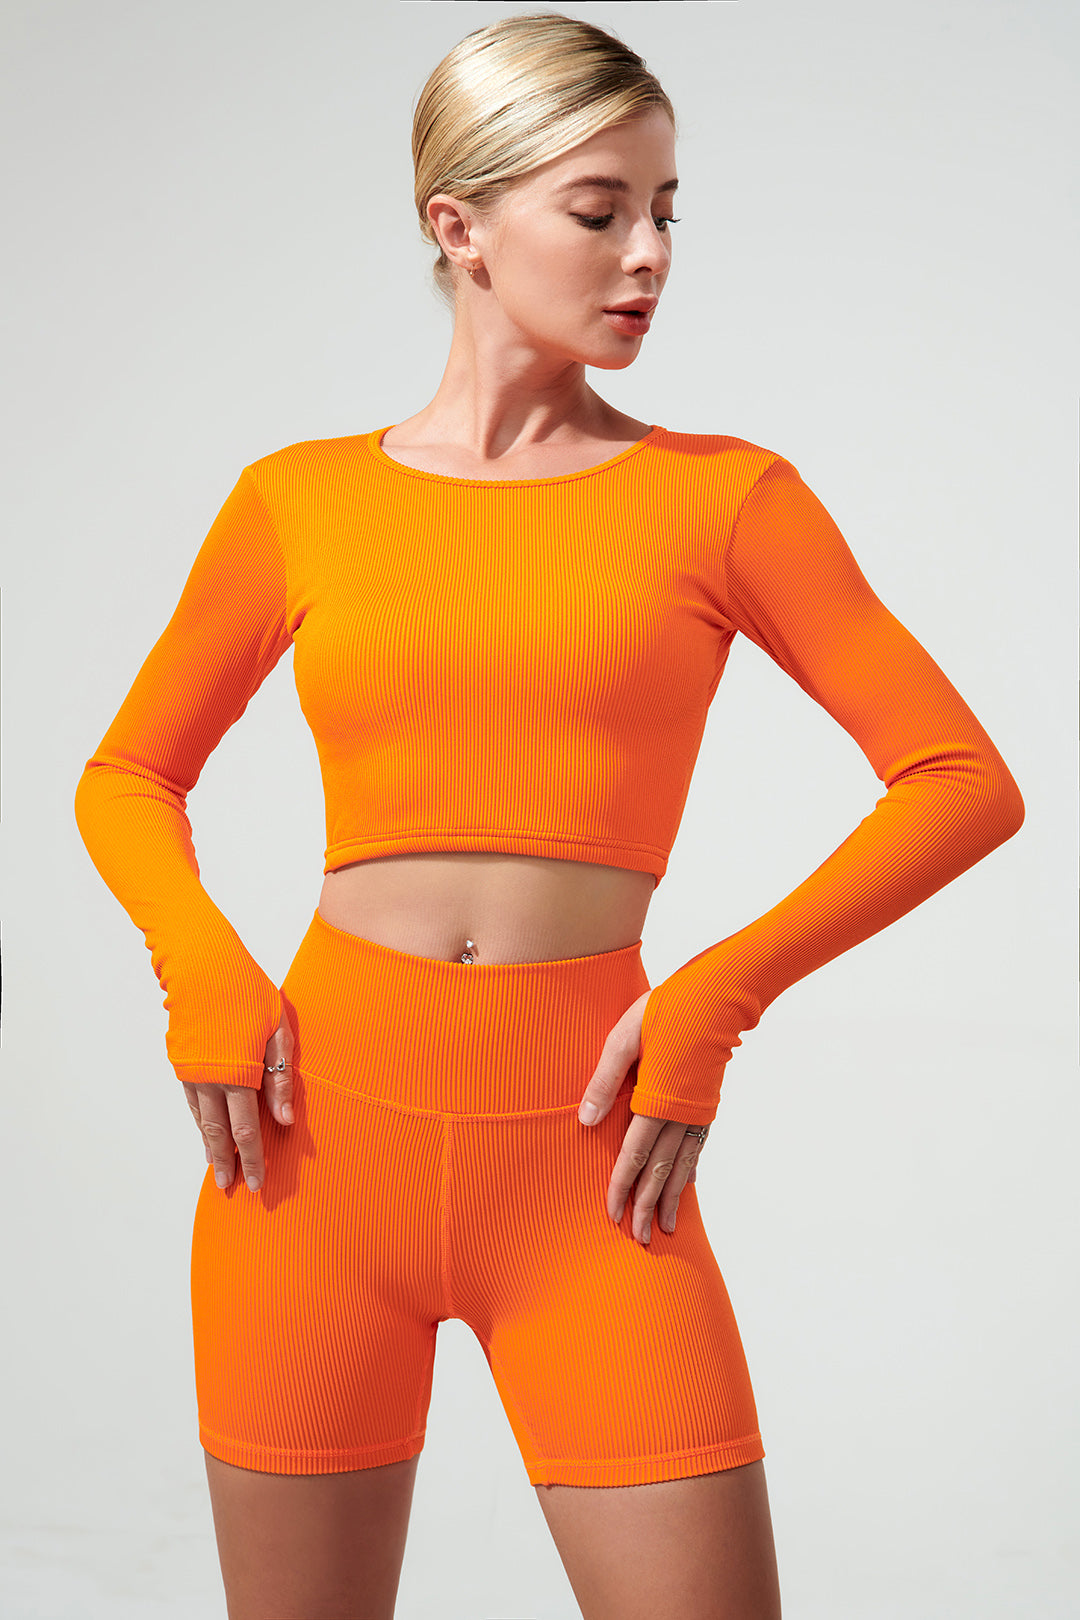 Fendy women's tangerine orange bra, stylish and comfortable lingerie for a vibrant look.